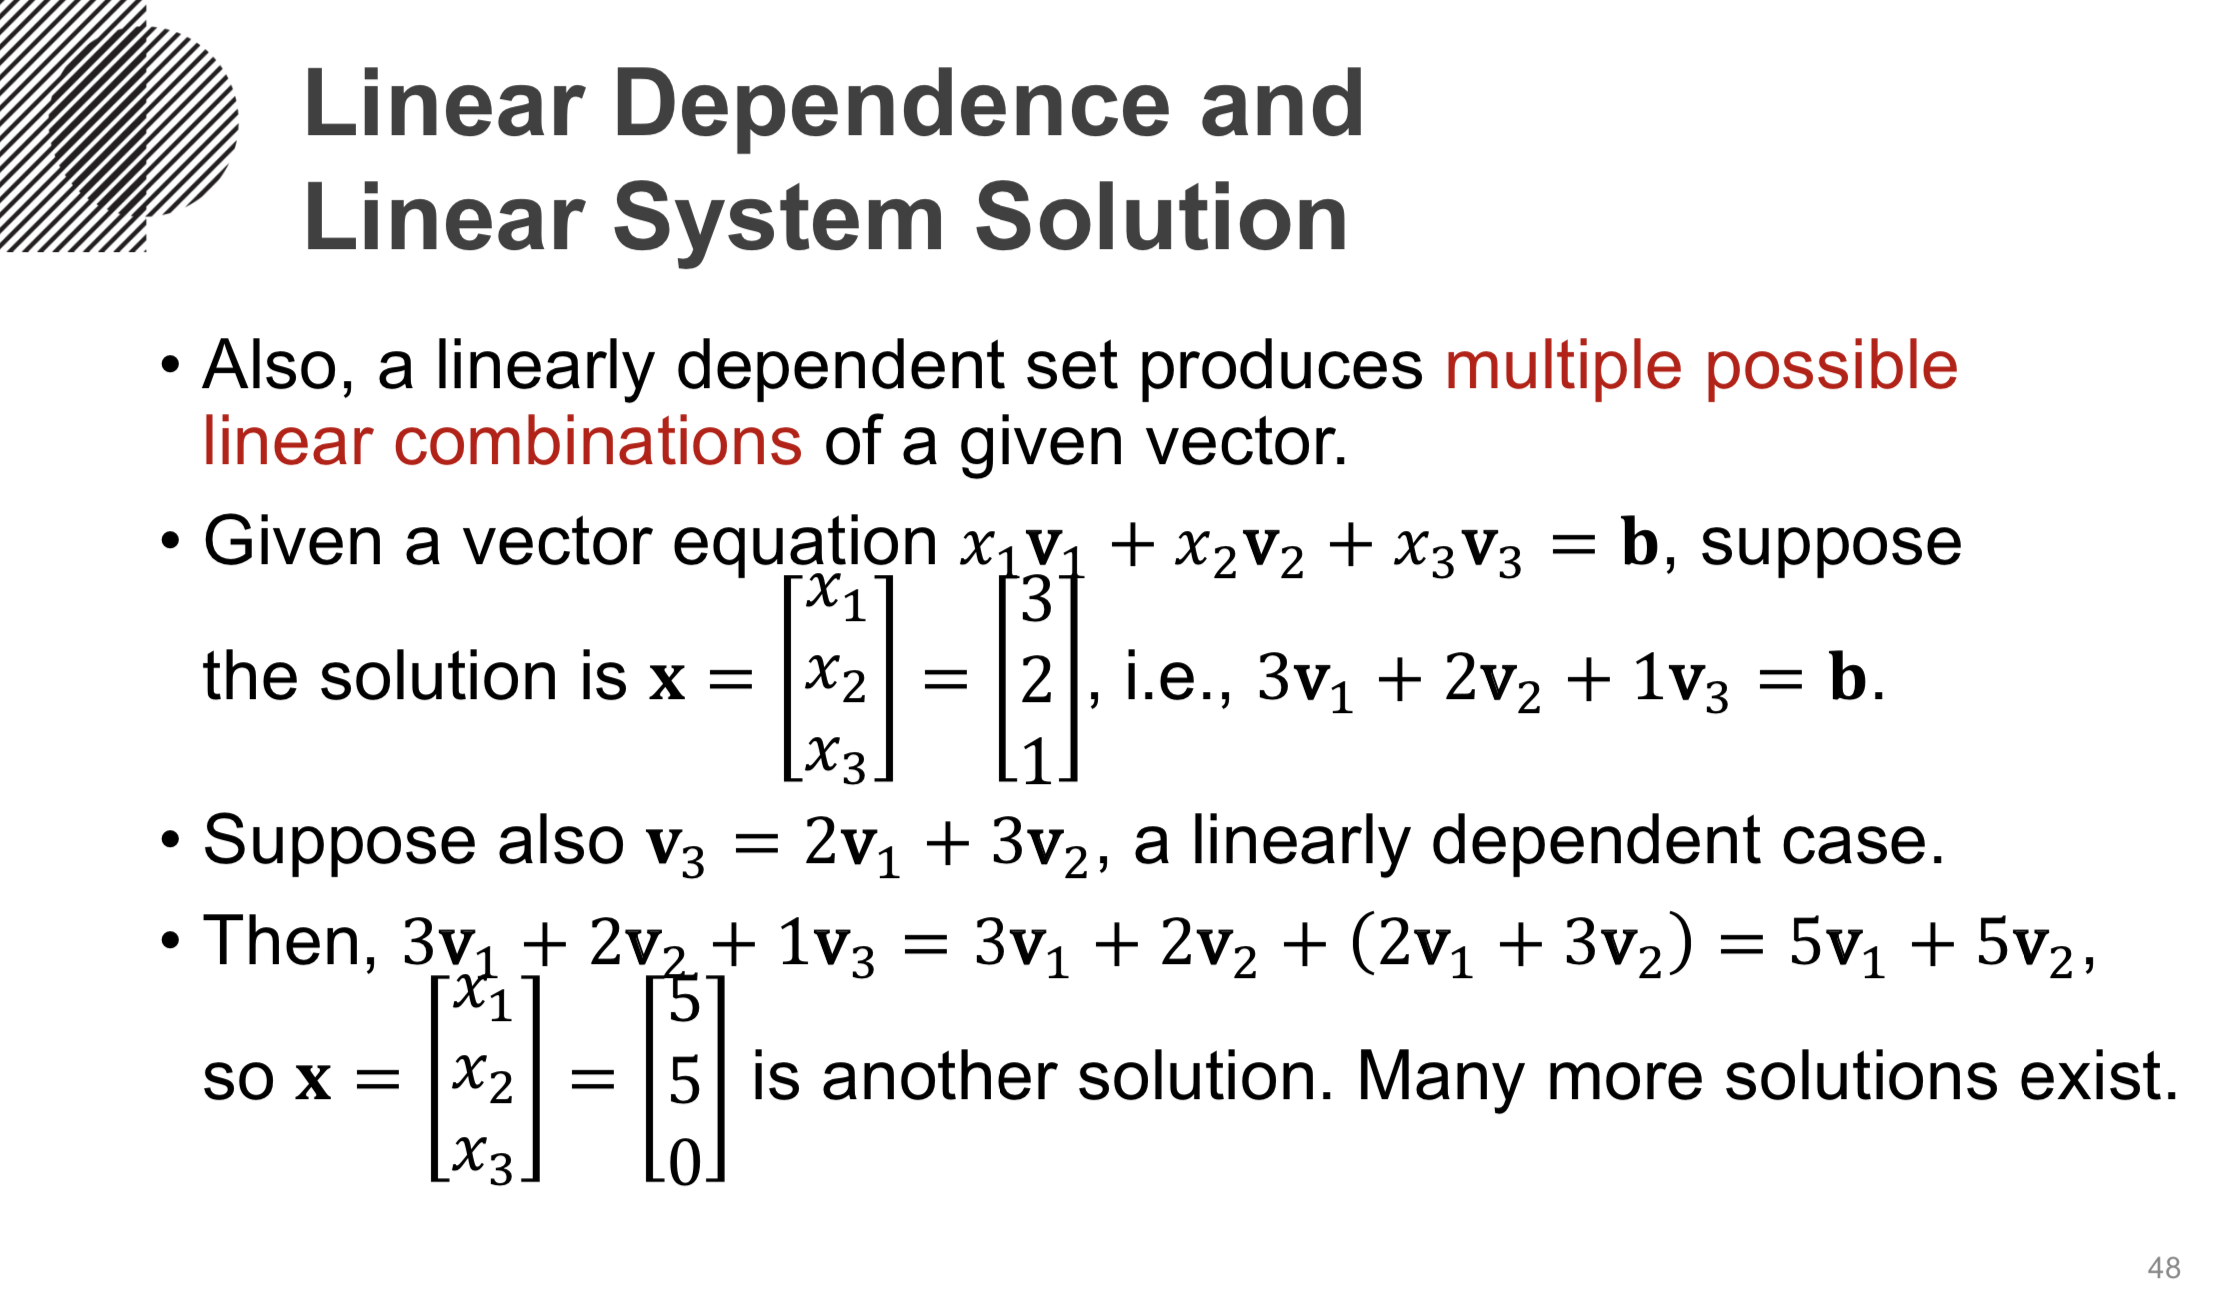 Linear dependent와 solution의 관계 - 01